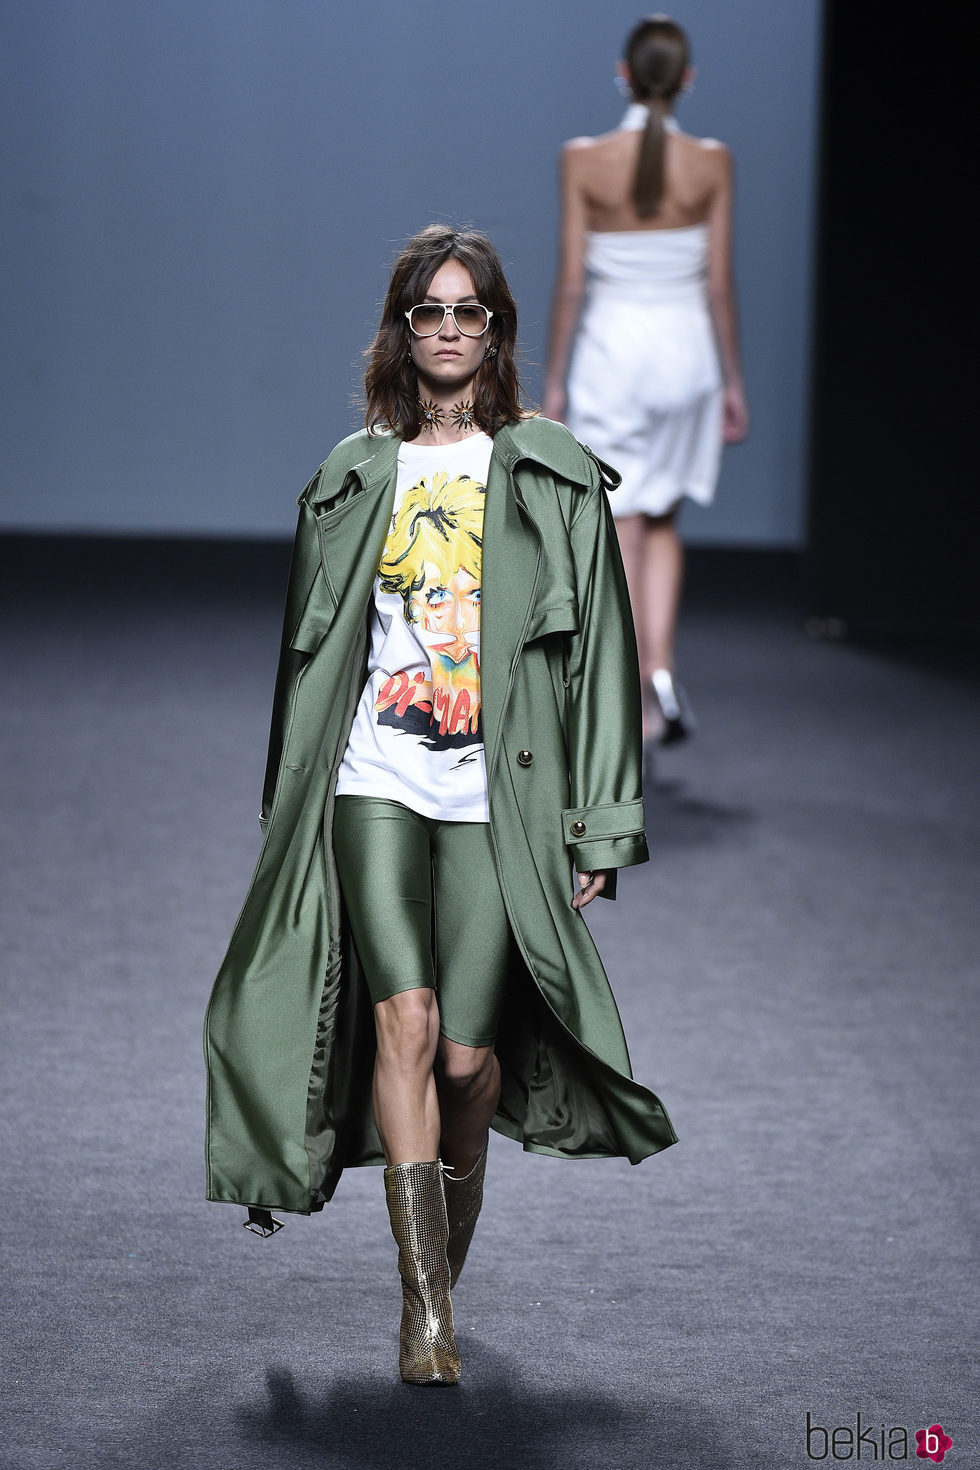 Gabardina verde de raso de María Escoté primavera/verano 2018 para Madrid Fashion Week